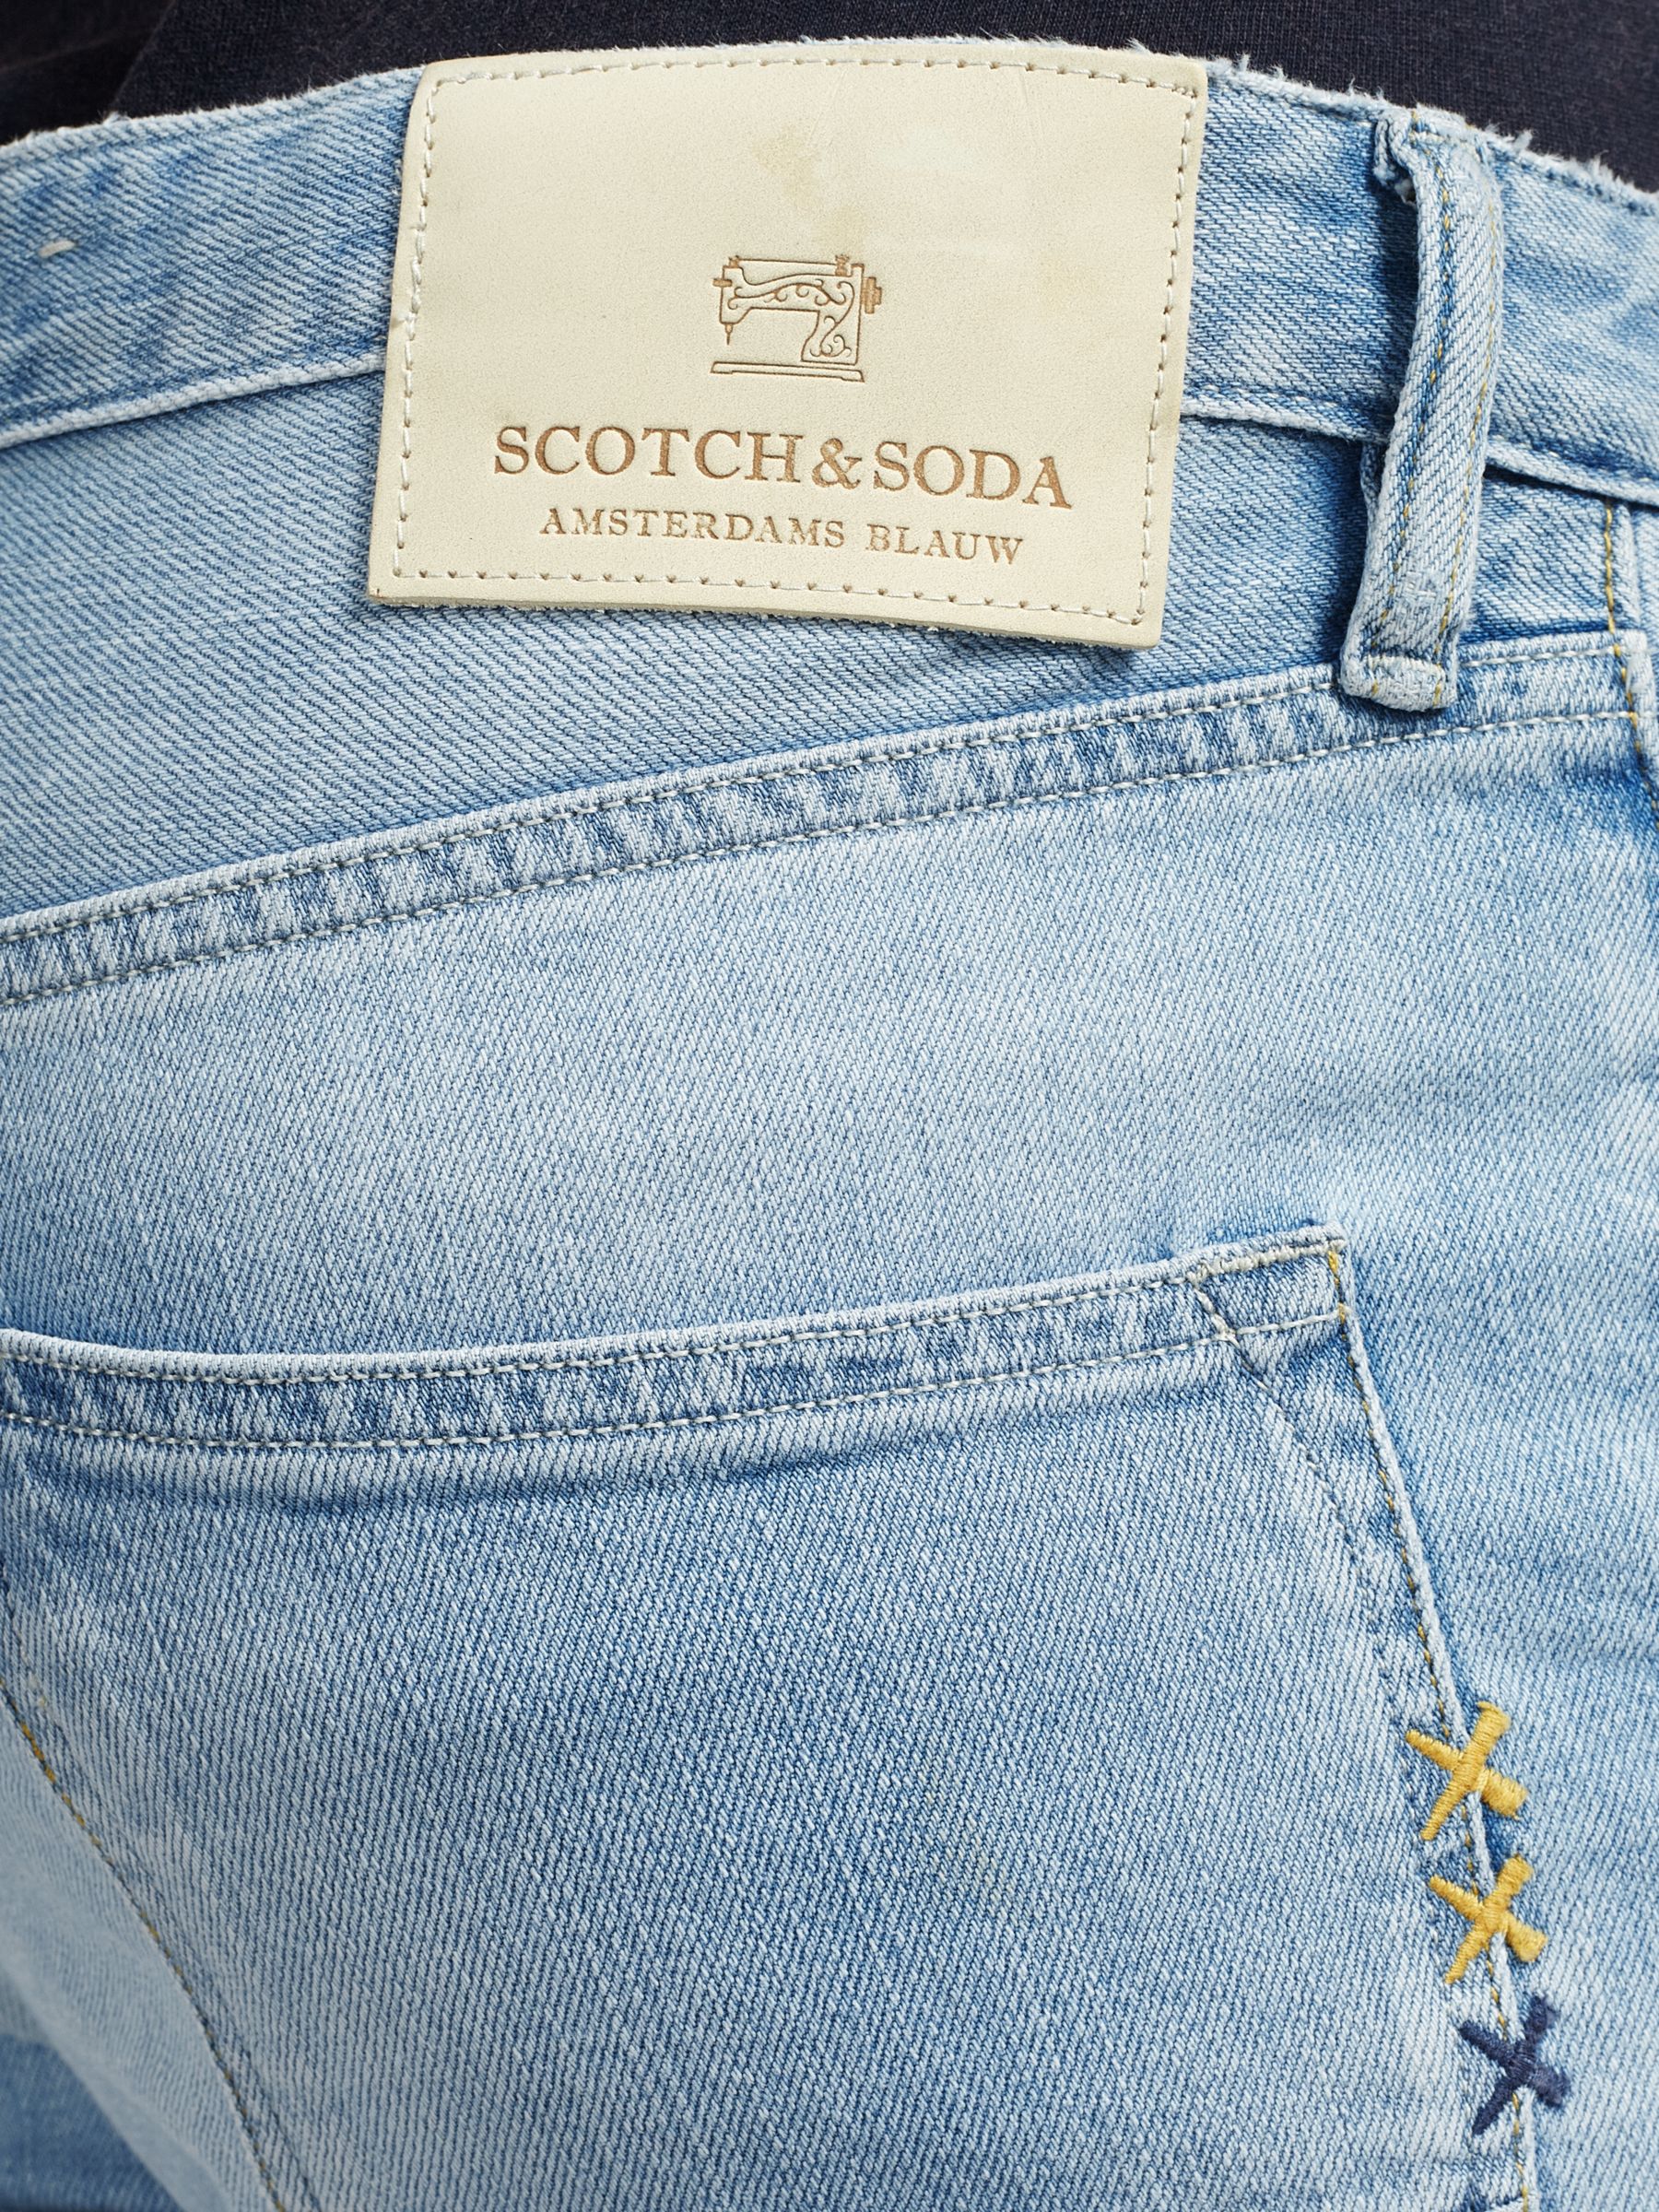 scotch and soda amsterdam blauw jeans